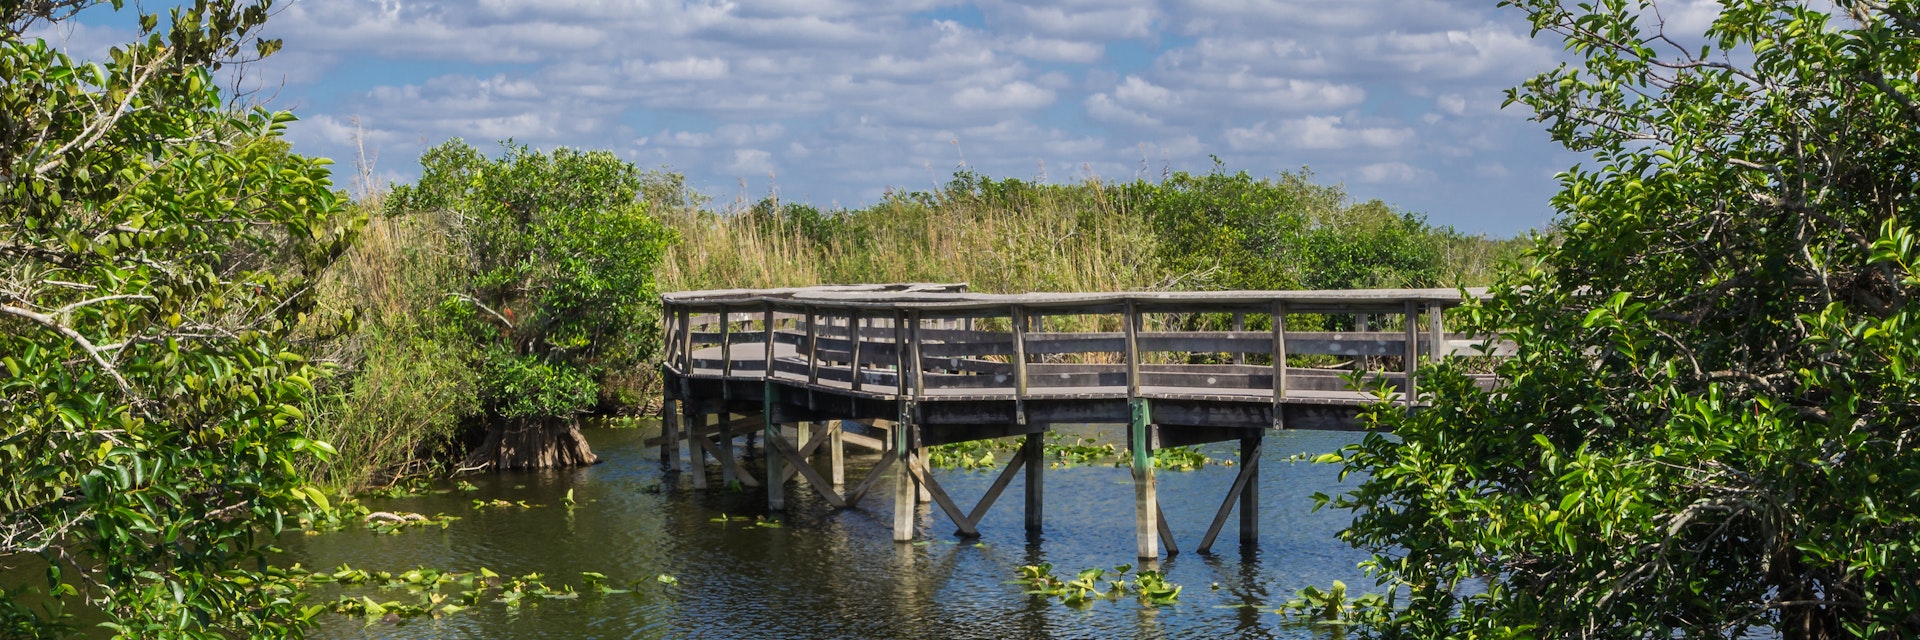 Anhinga Trail Boardwalk through the Everglades National Park, Florida.
